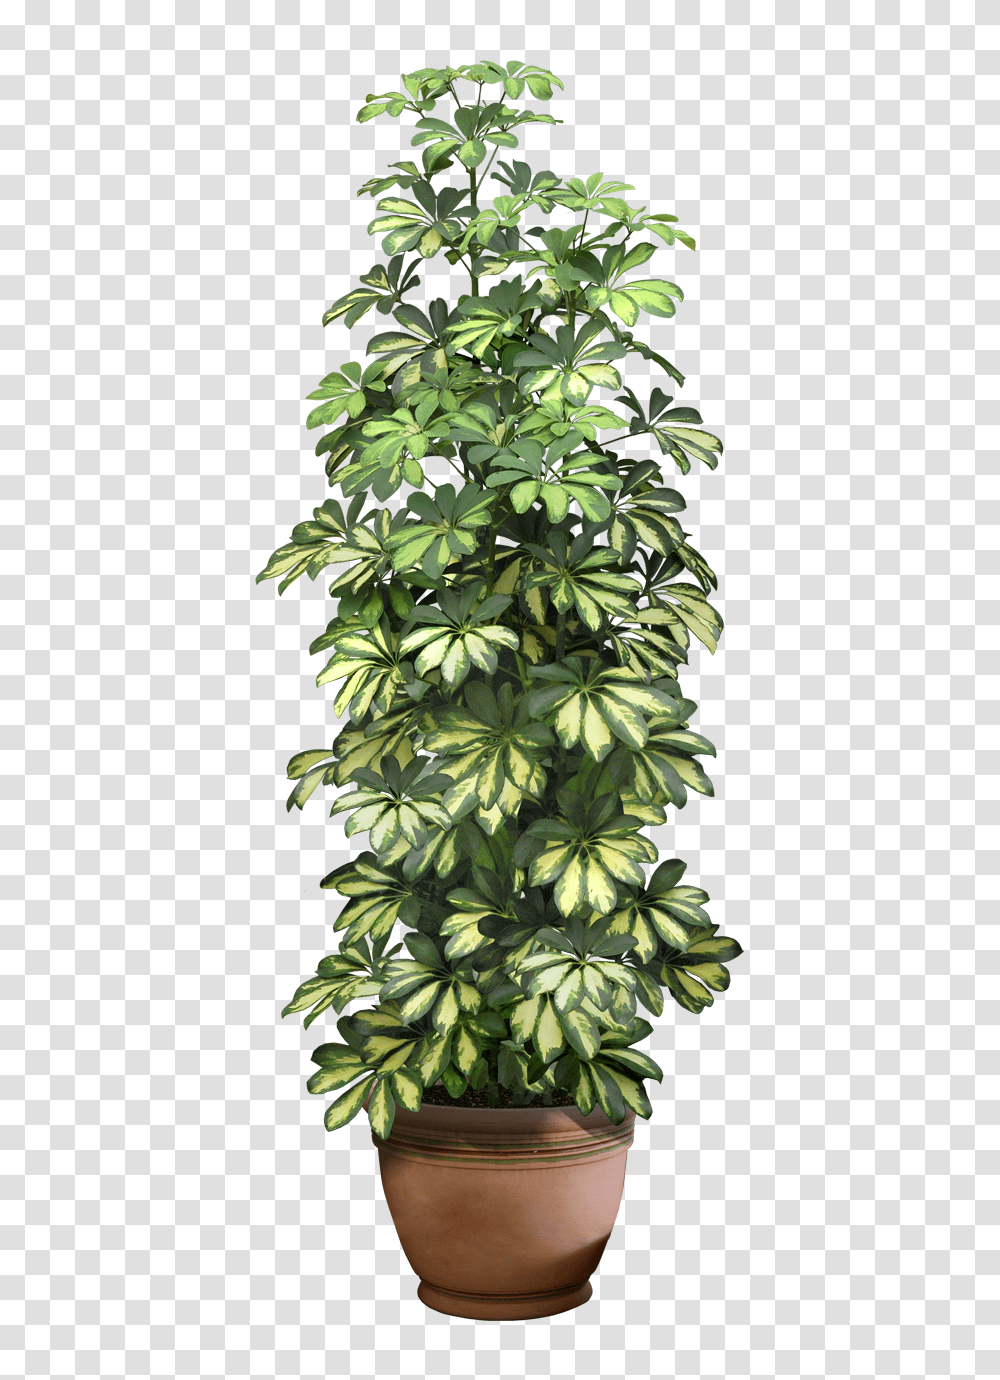 Download Hd 0 9ddb1 5c7a292c Xxl Pot Plant Format Flower Pot, Leaf, Tree, Blossom, Pineapple Transparent Png